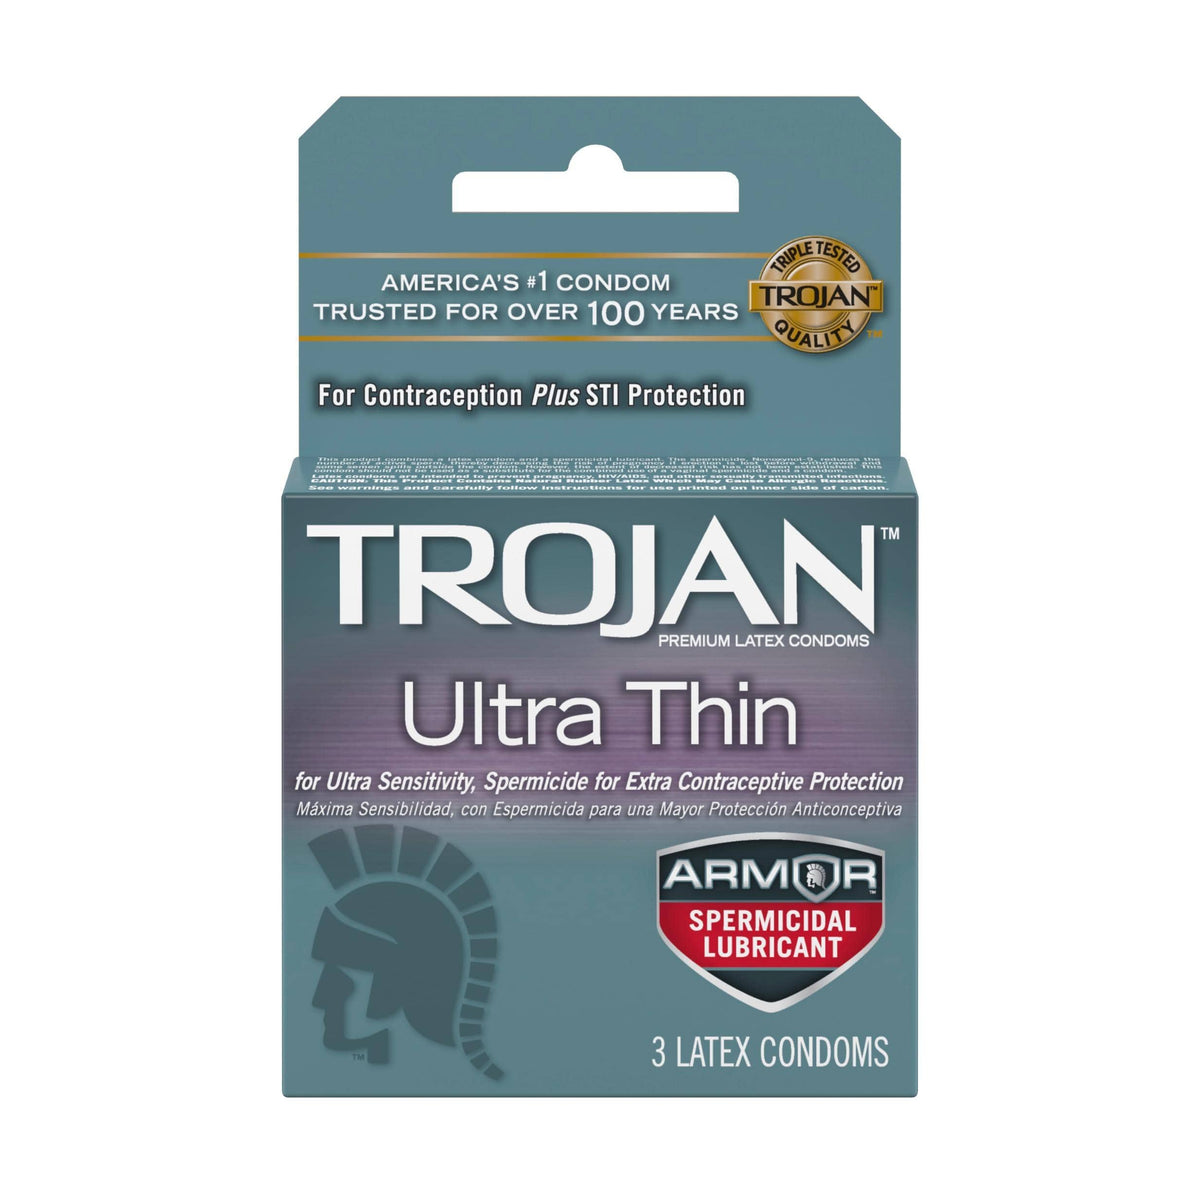 trojan ultra thin armor spermicidal condoms 3 pack